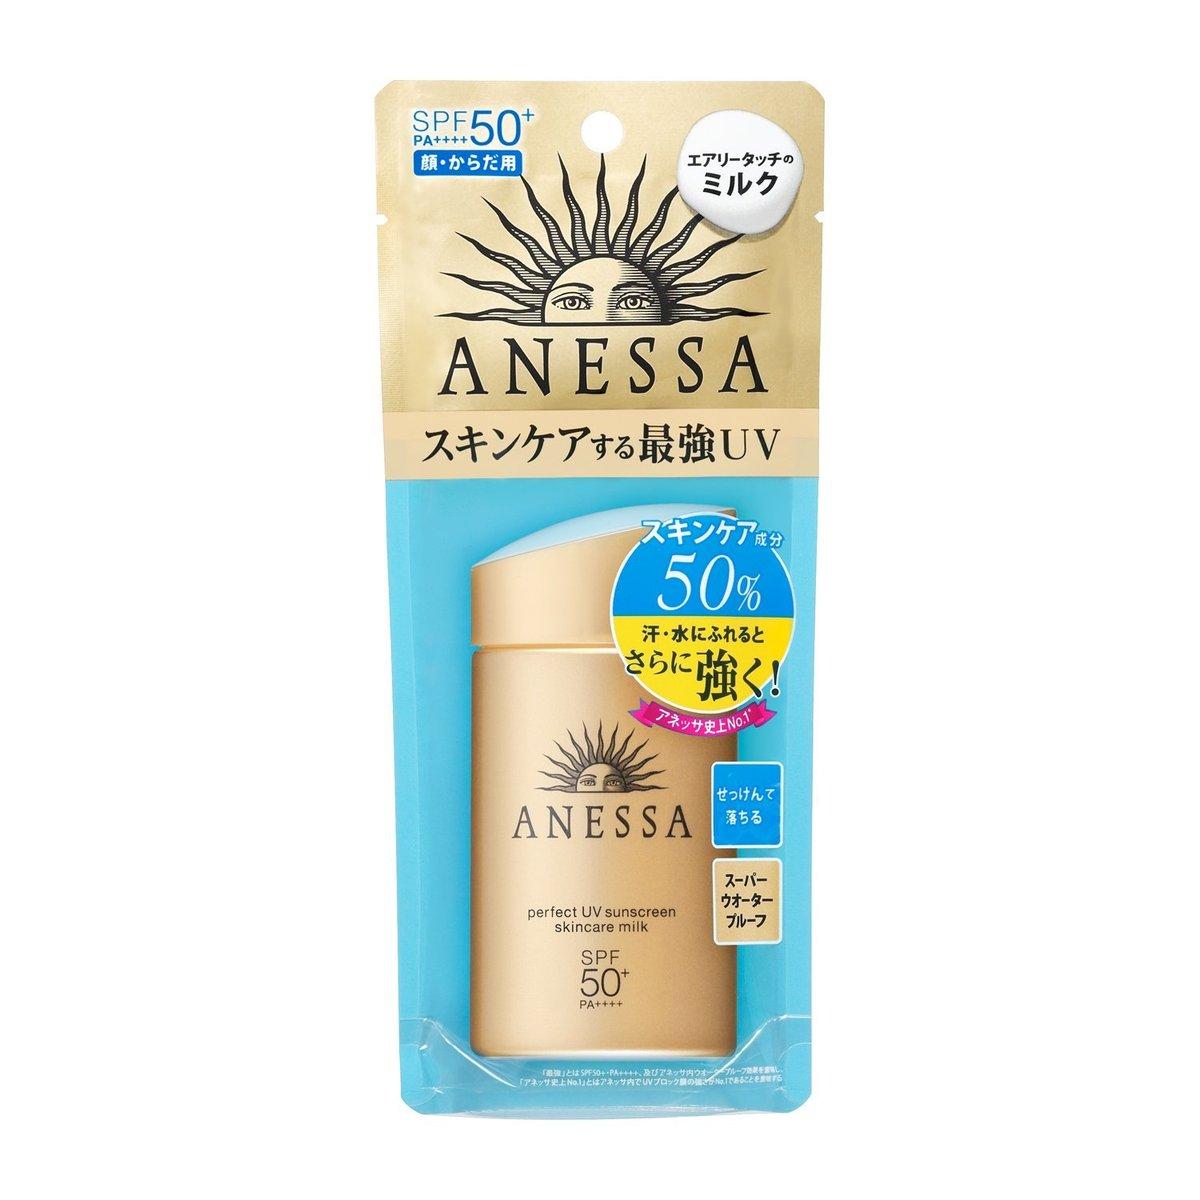 shiseido-anessa-perfect-uv-sunscreen-skincare-milk-spf50-pa-60ml